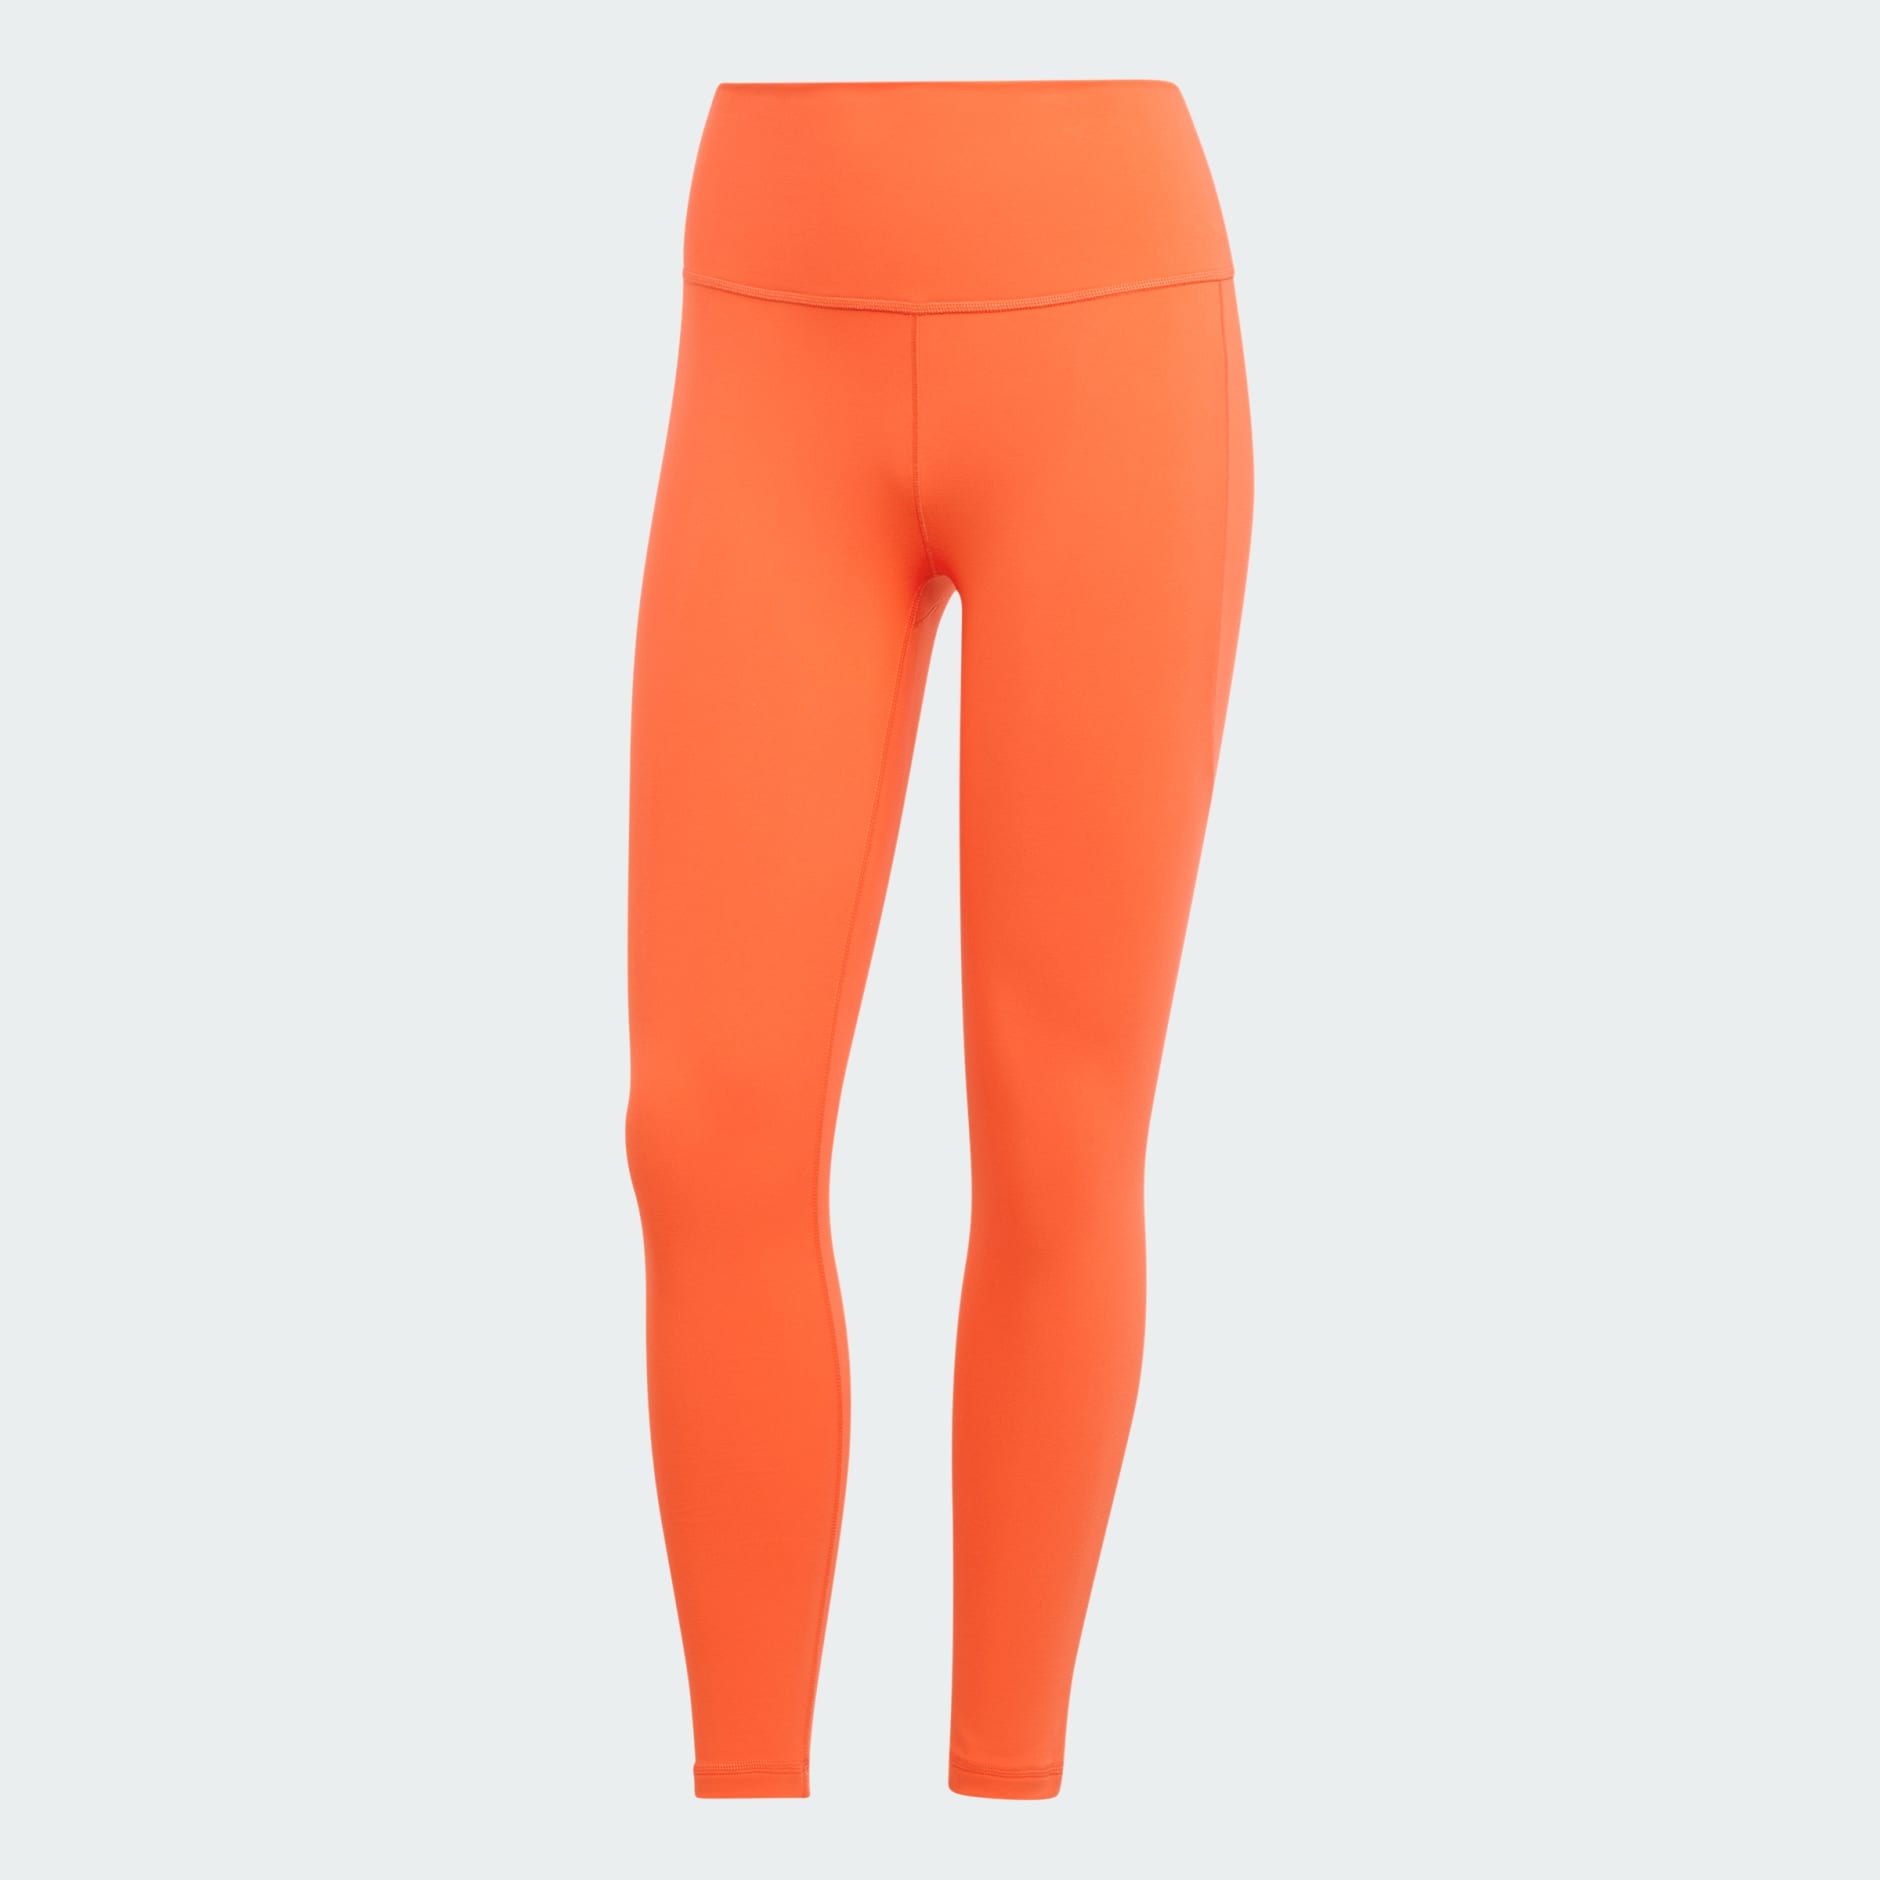 Womens Leggings, Fruit Orange Leggings, Food Print Workout Exercise Leggings,  Womens Yoga Pants, Polyester Spandex Leggings XS S M L XL Size 